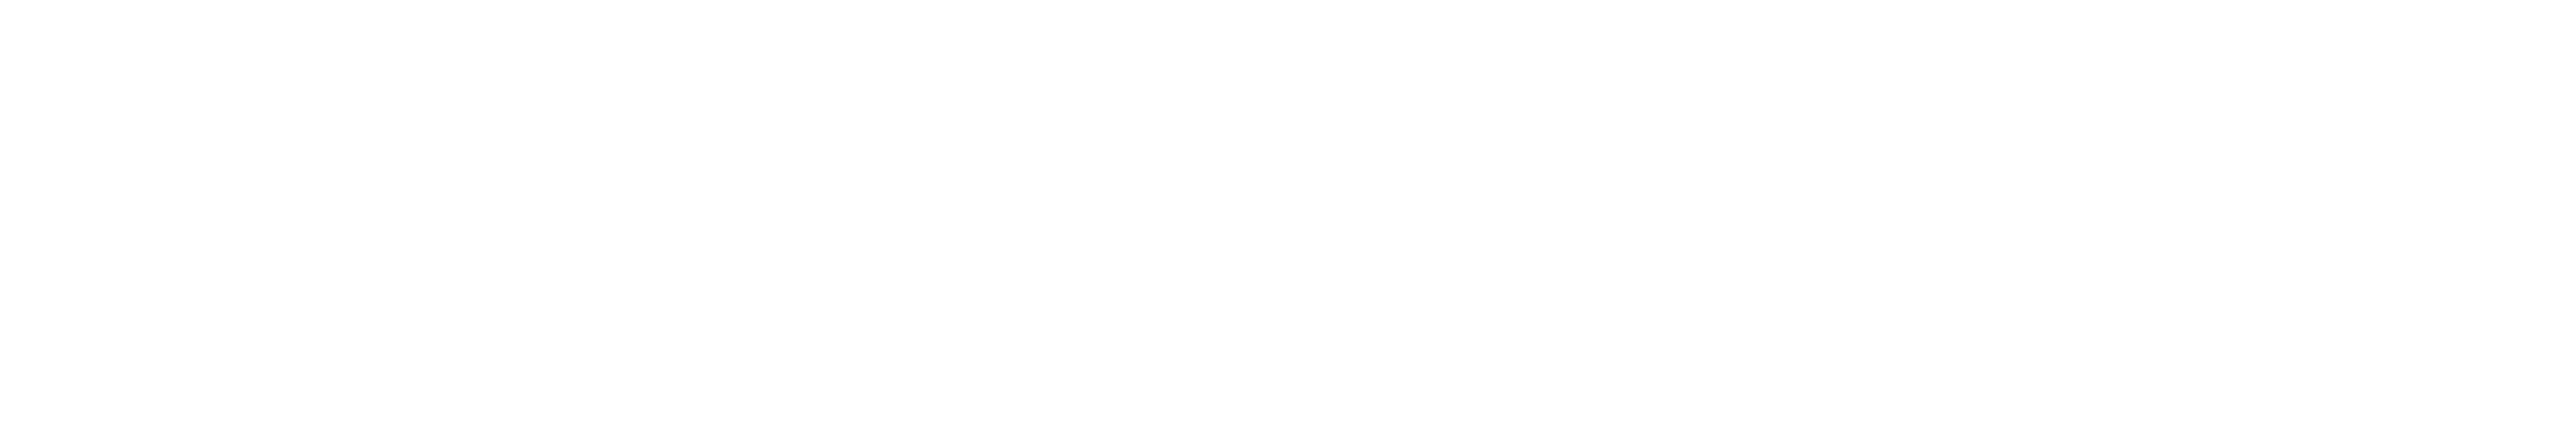 logo neutral